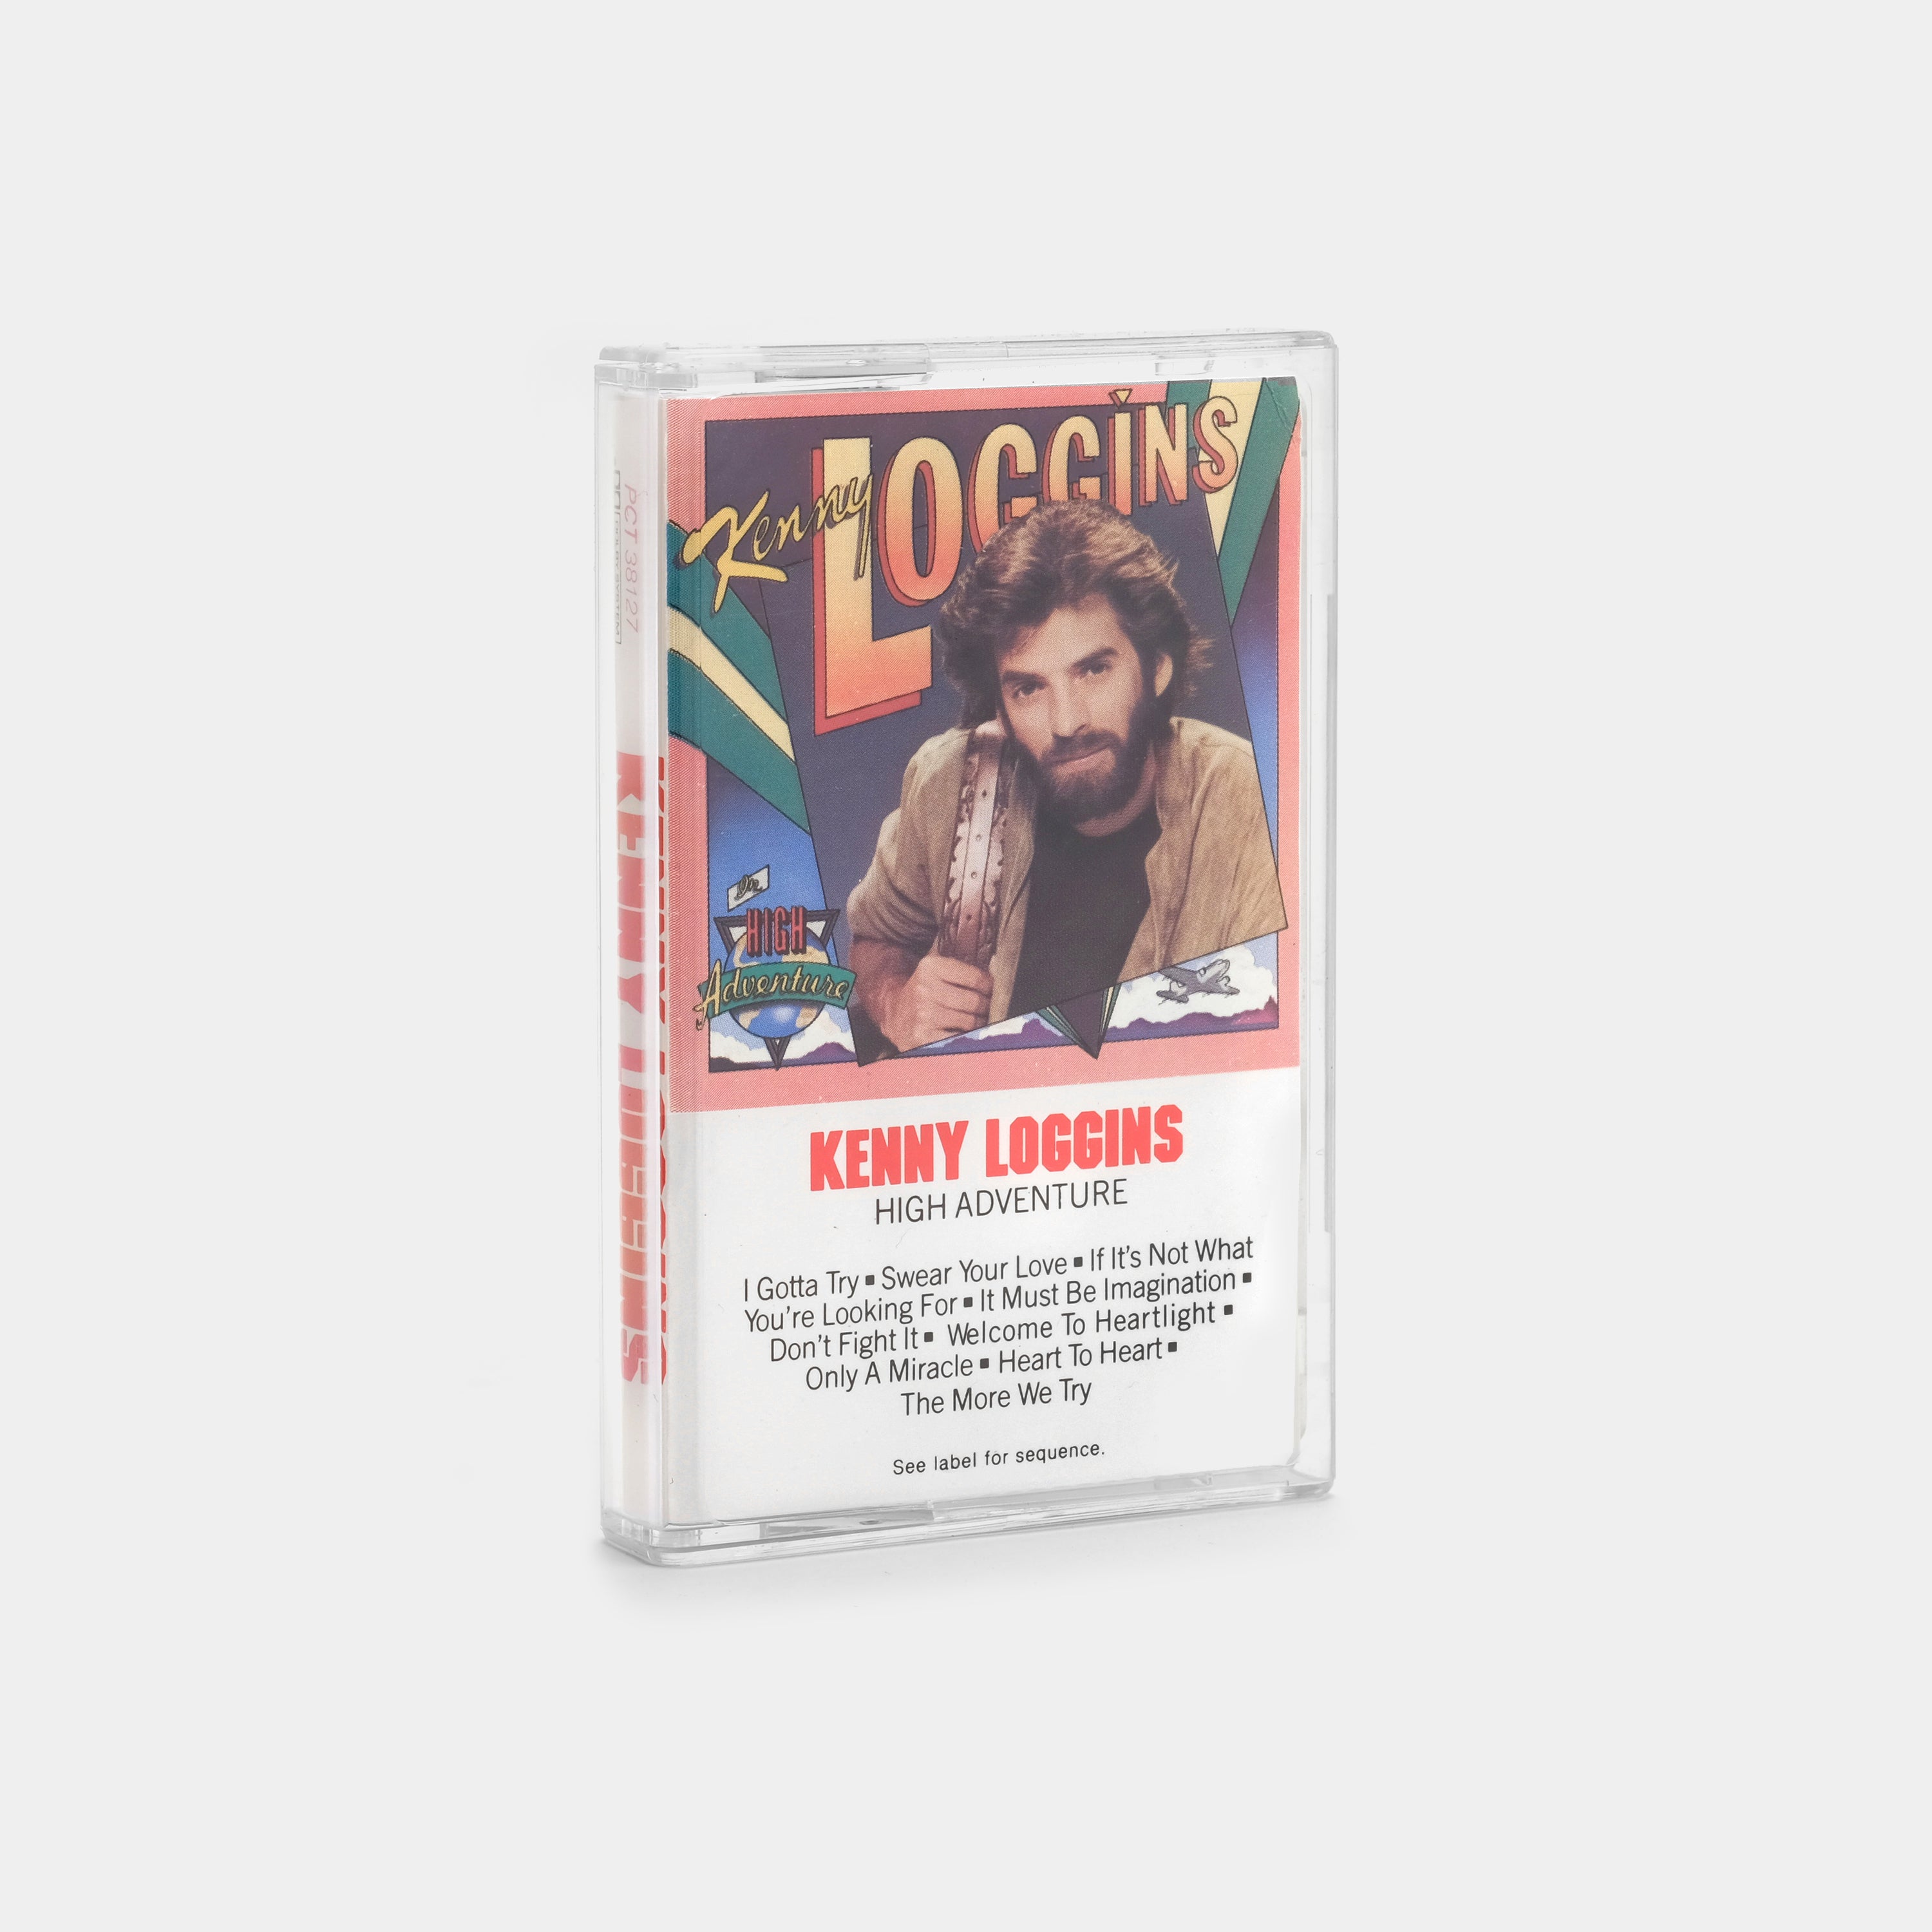 Kenny Loggins - High Adventure Cassette Tape